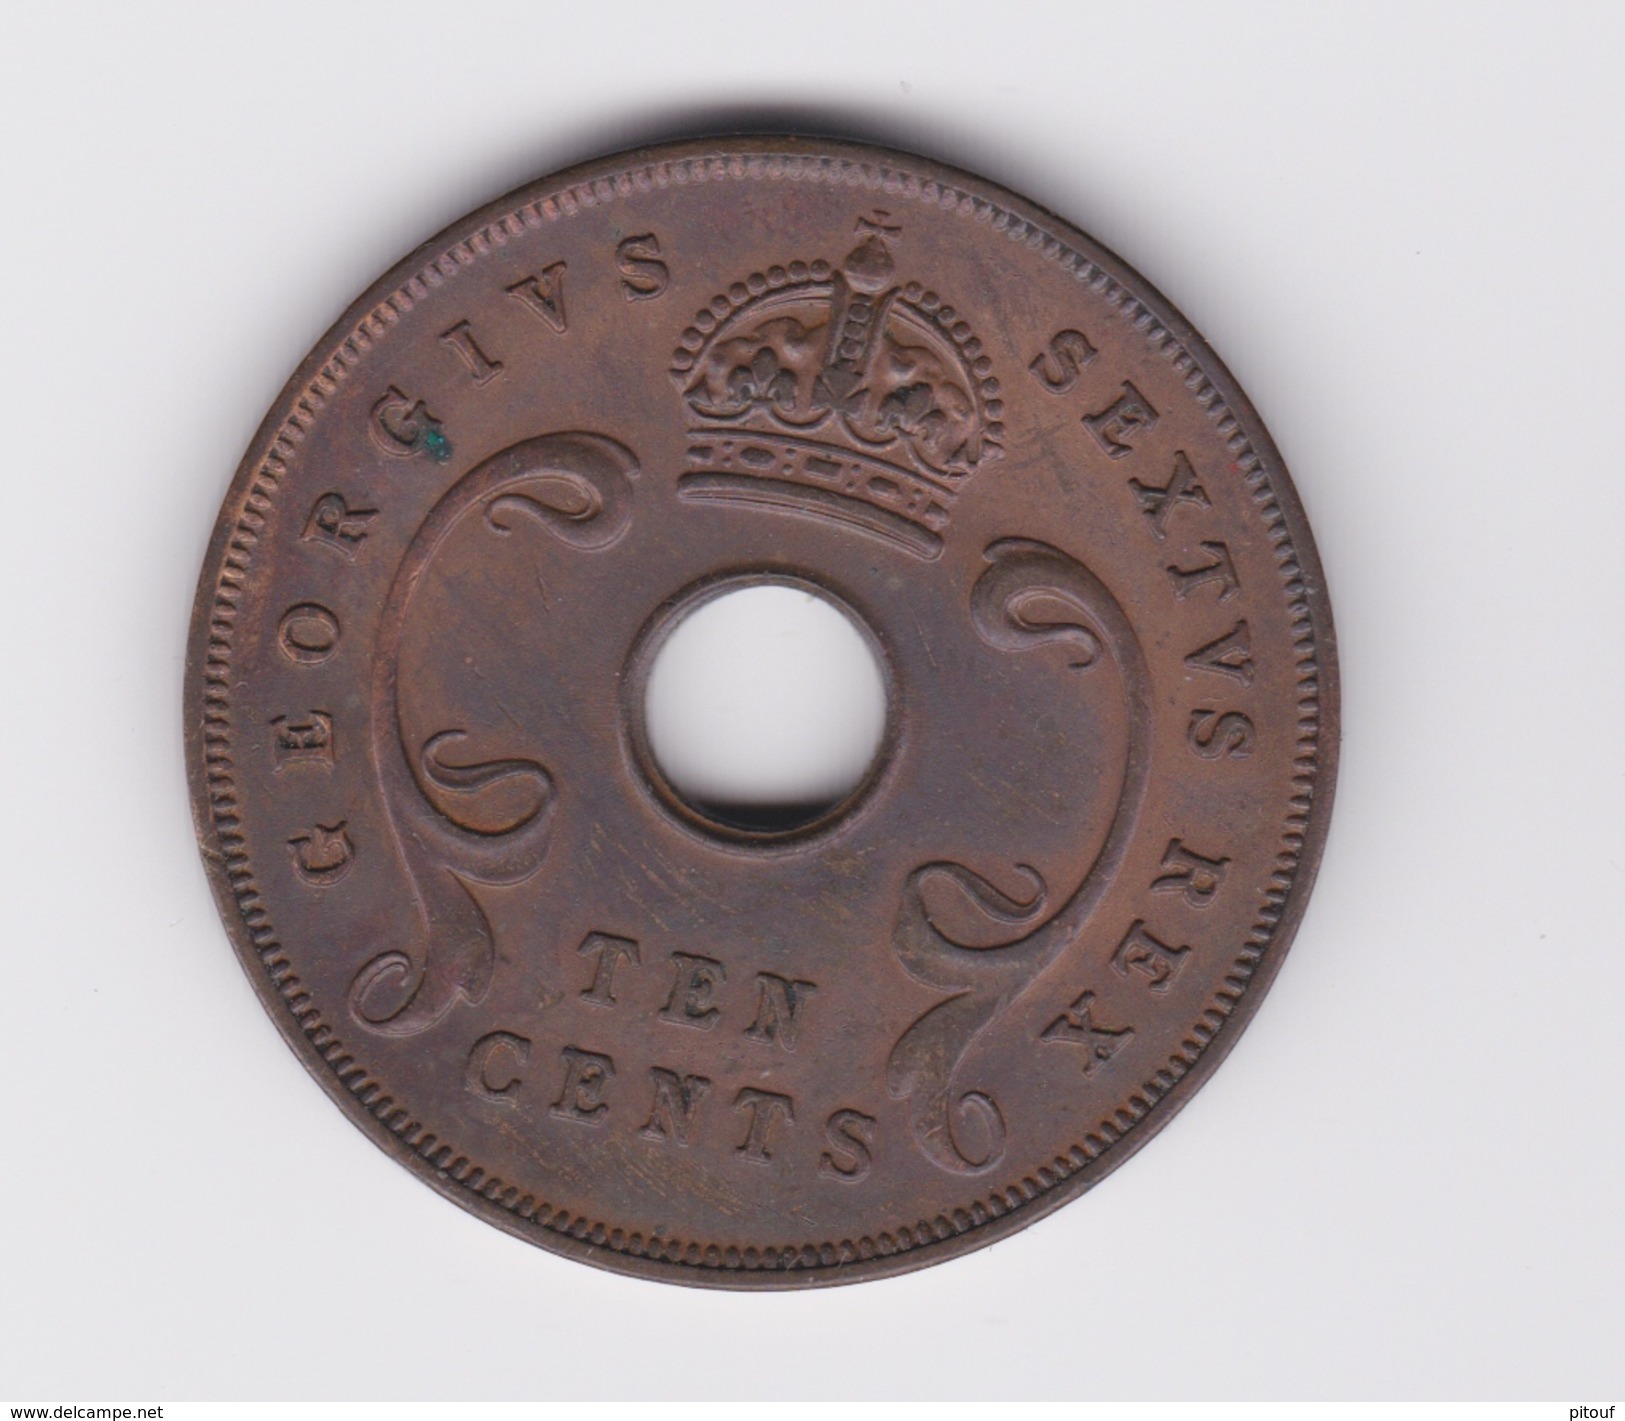 10 Cents East Africa (Grande Bretagne)TTB 1951 - Colonia Británica